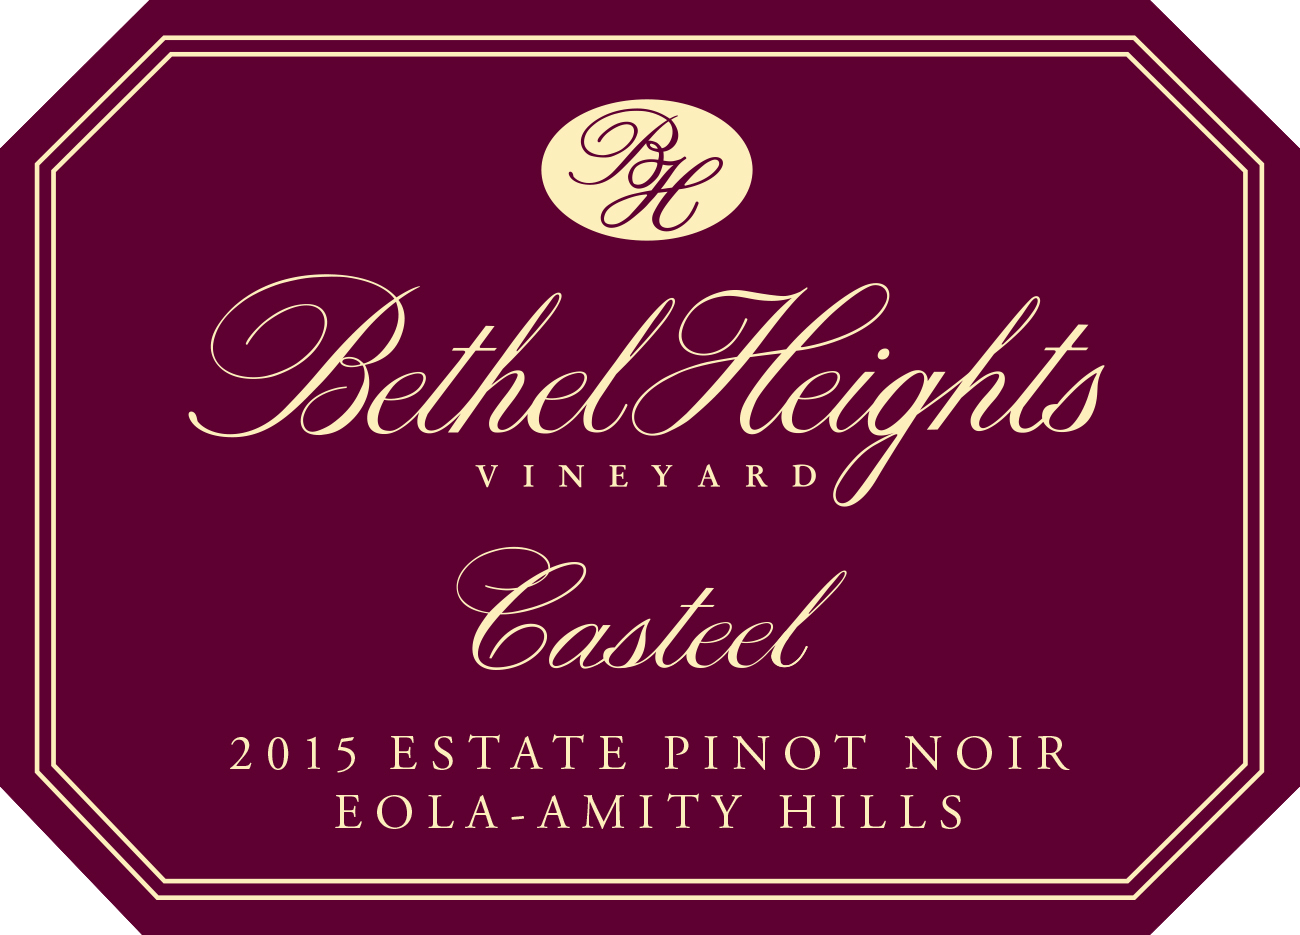 2014 Bethel Heights Pinot Noir Casteel Eola-Amity Hills Magnum image